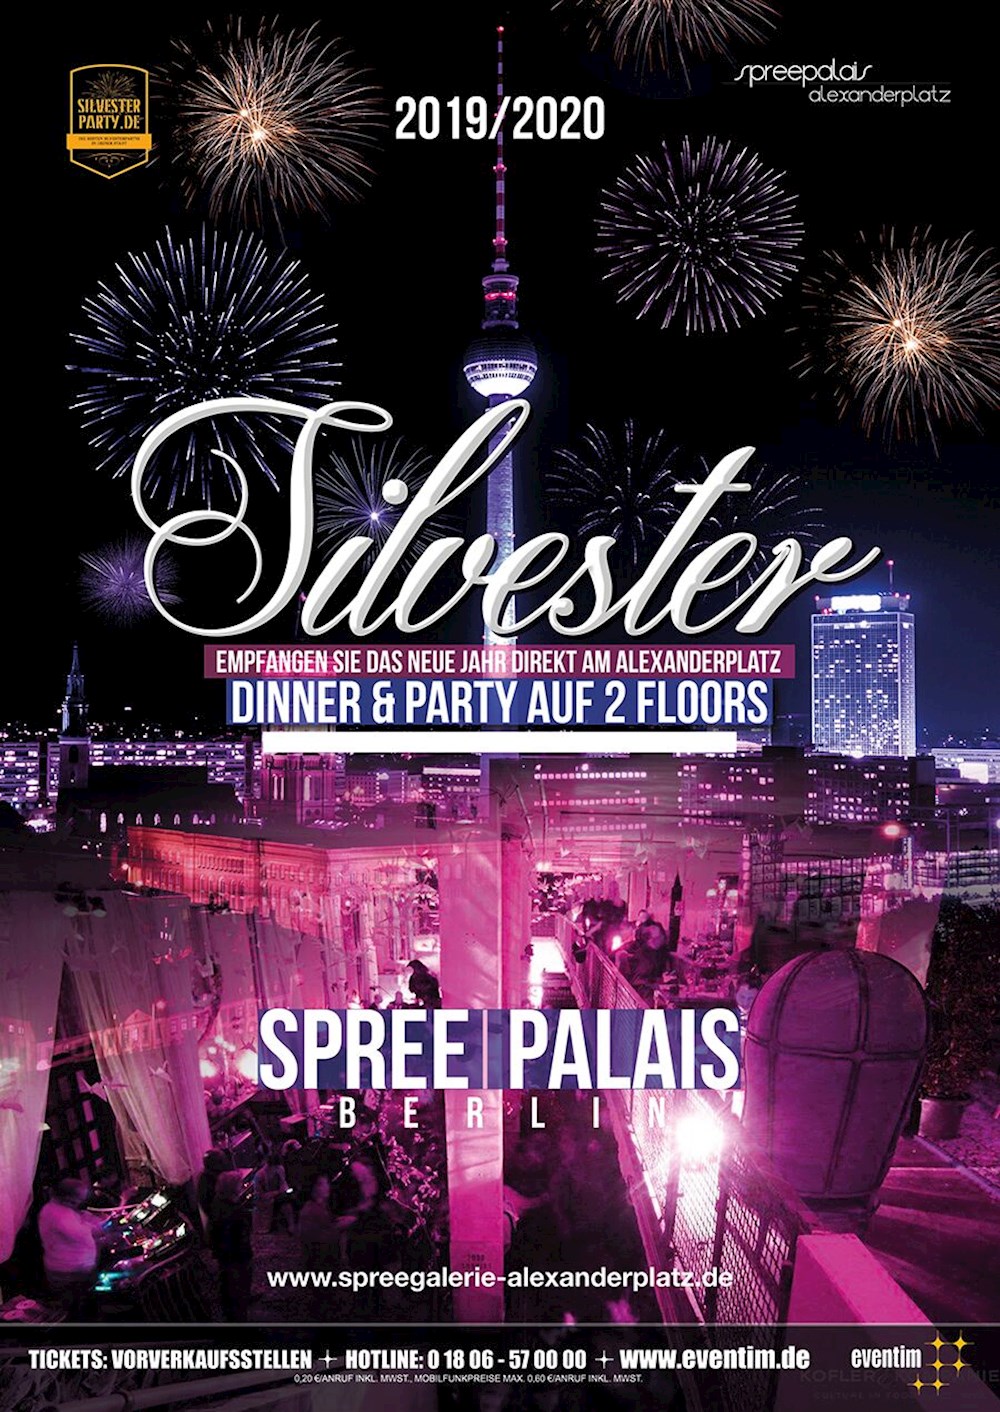 Spreepalais Alexanderplatz Berlin Silvester Deluxe auf 4 Floors im Spreepalais am Alexanderplatz in Berlin